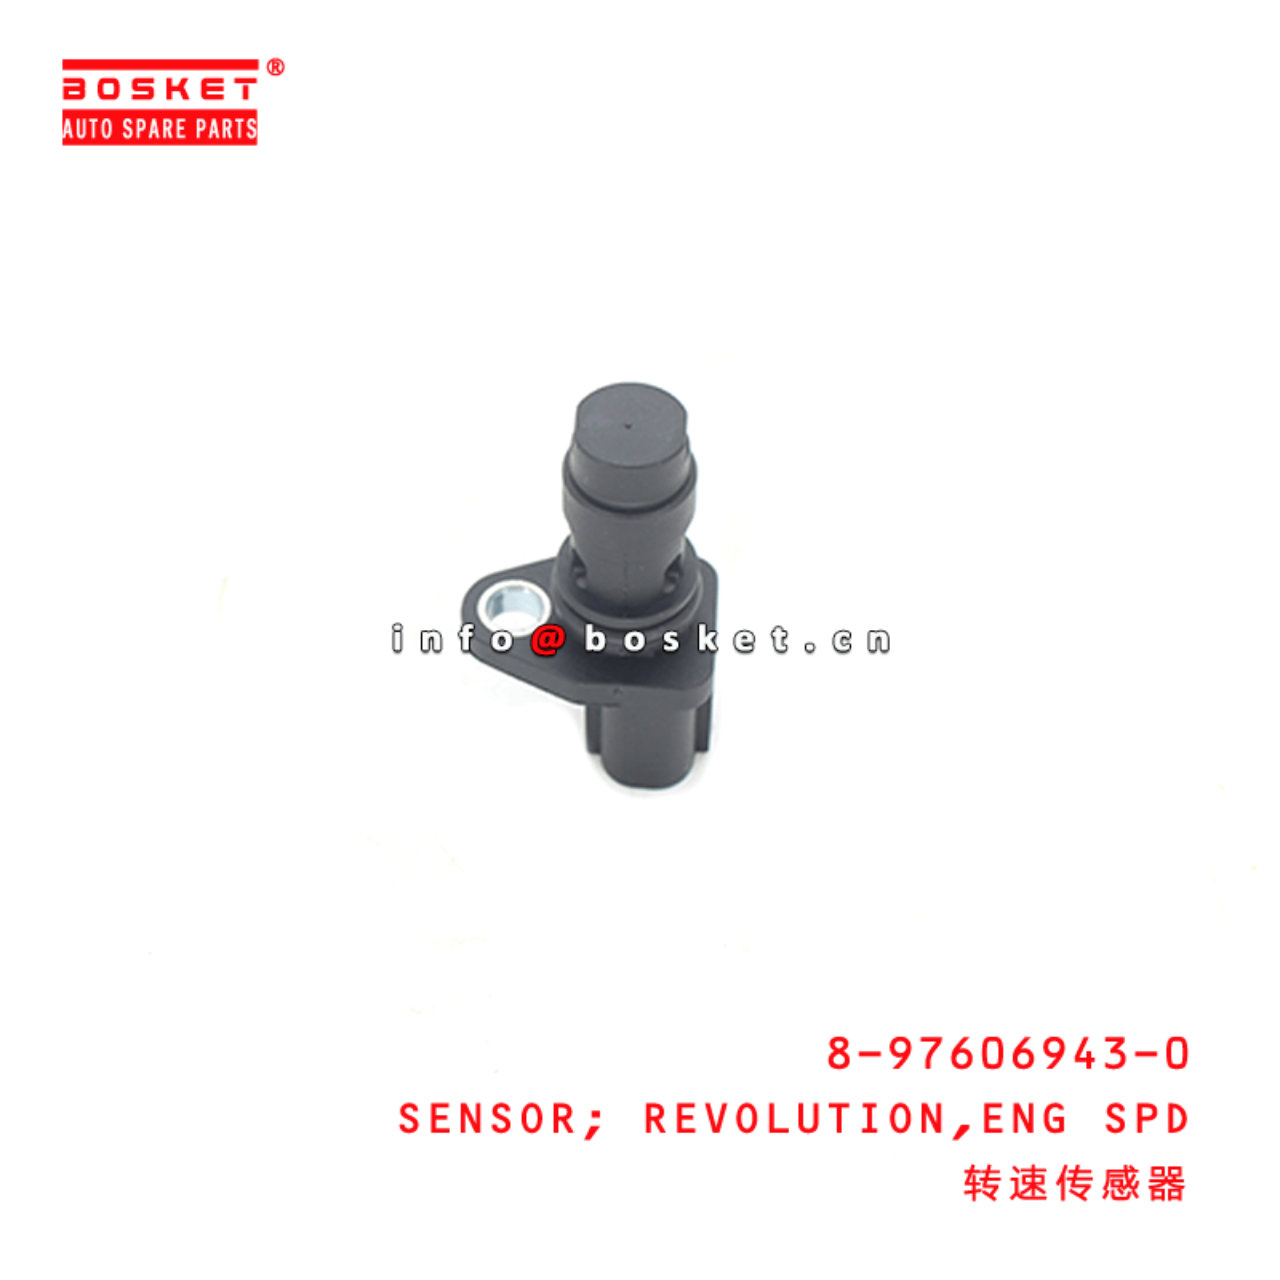  8-97606943-0 Engine Speed Revolution Sensor 8976069430 Suitable for ISUZU ELF 4HK1